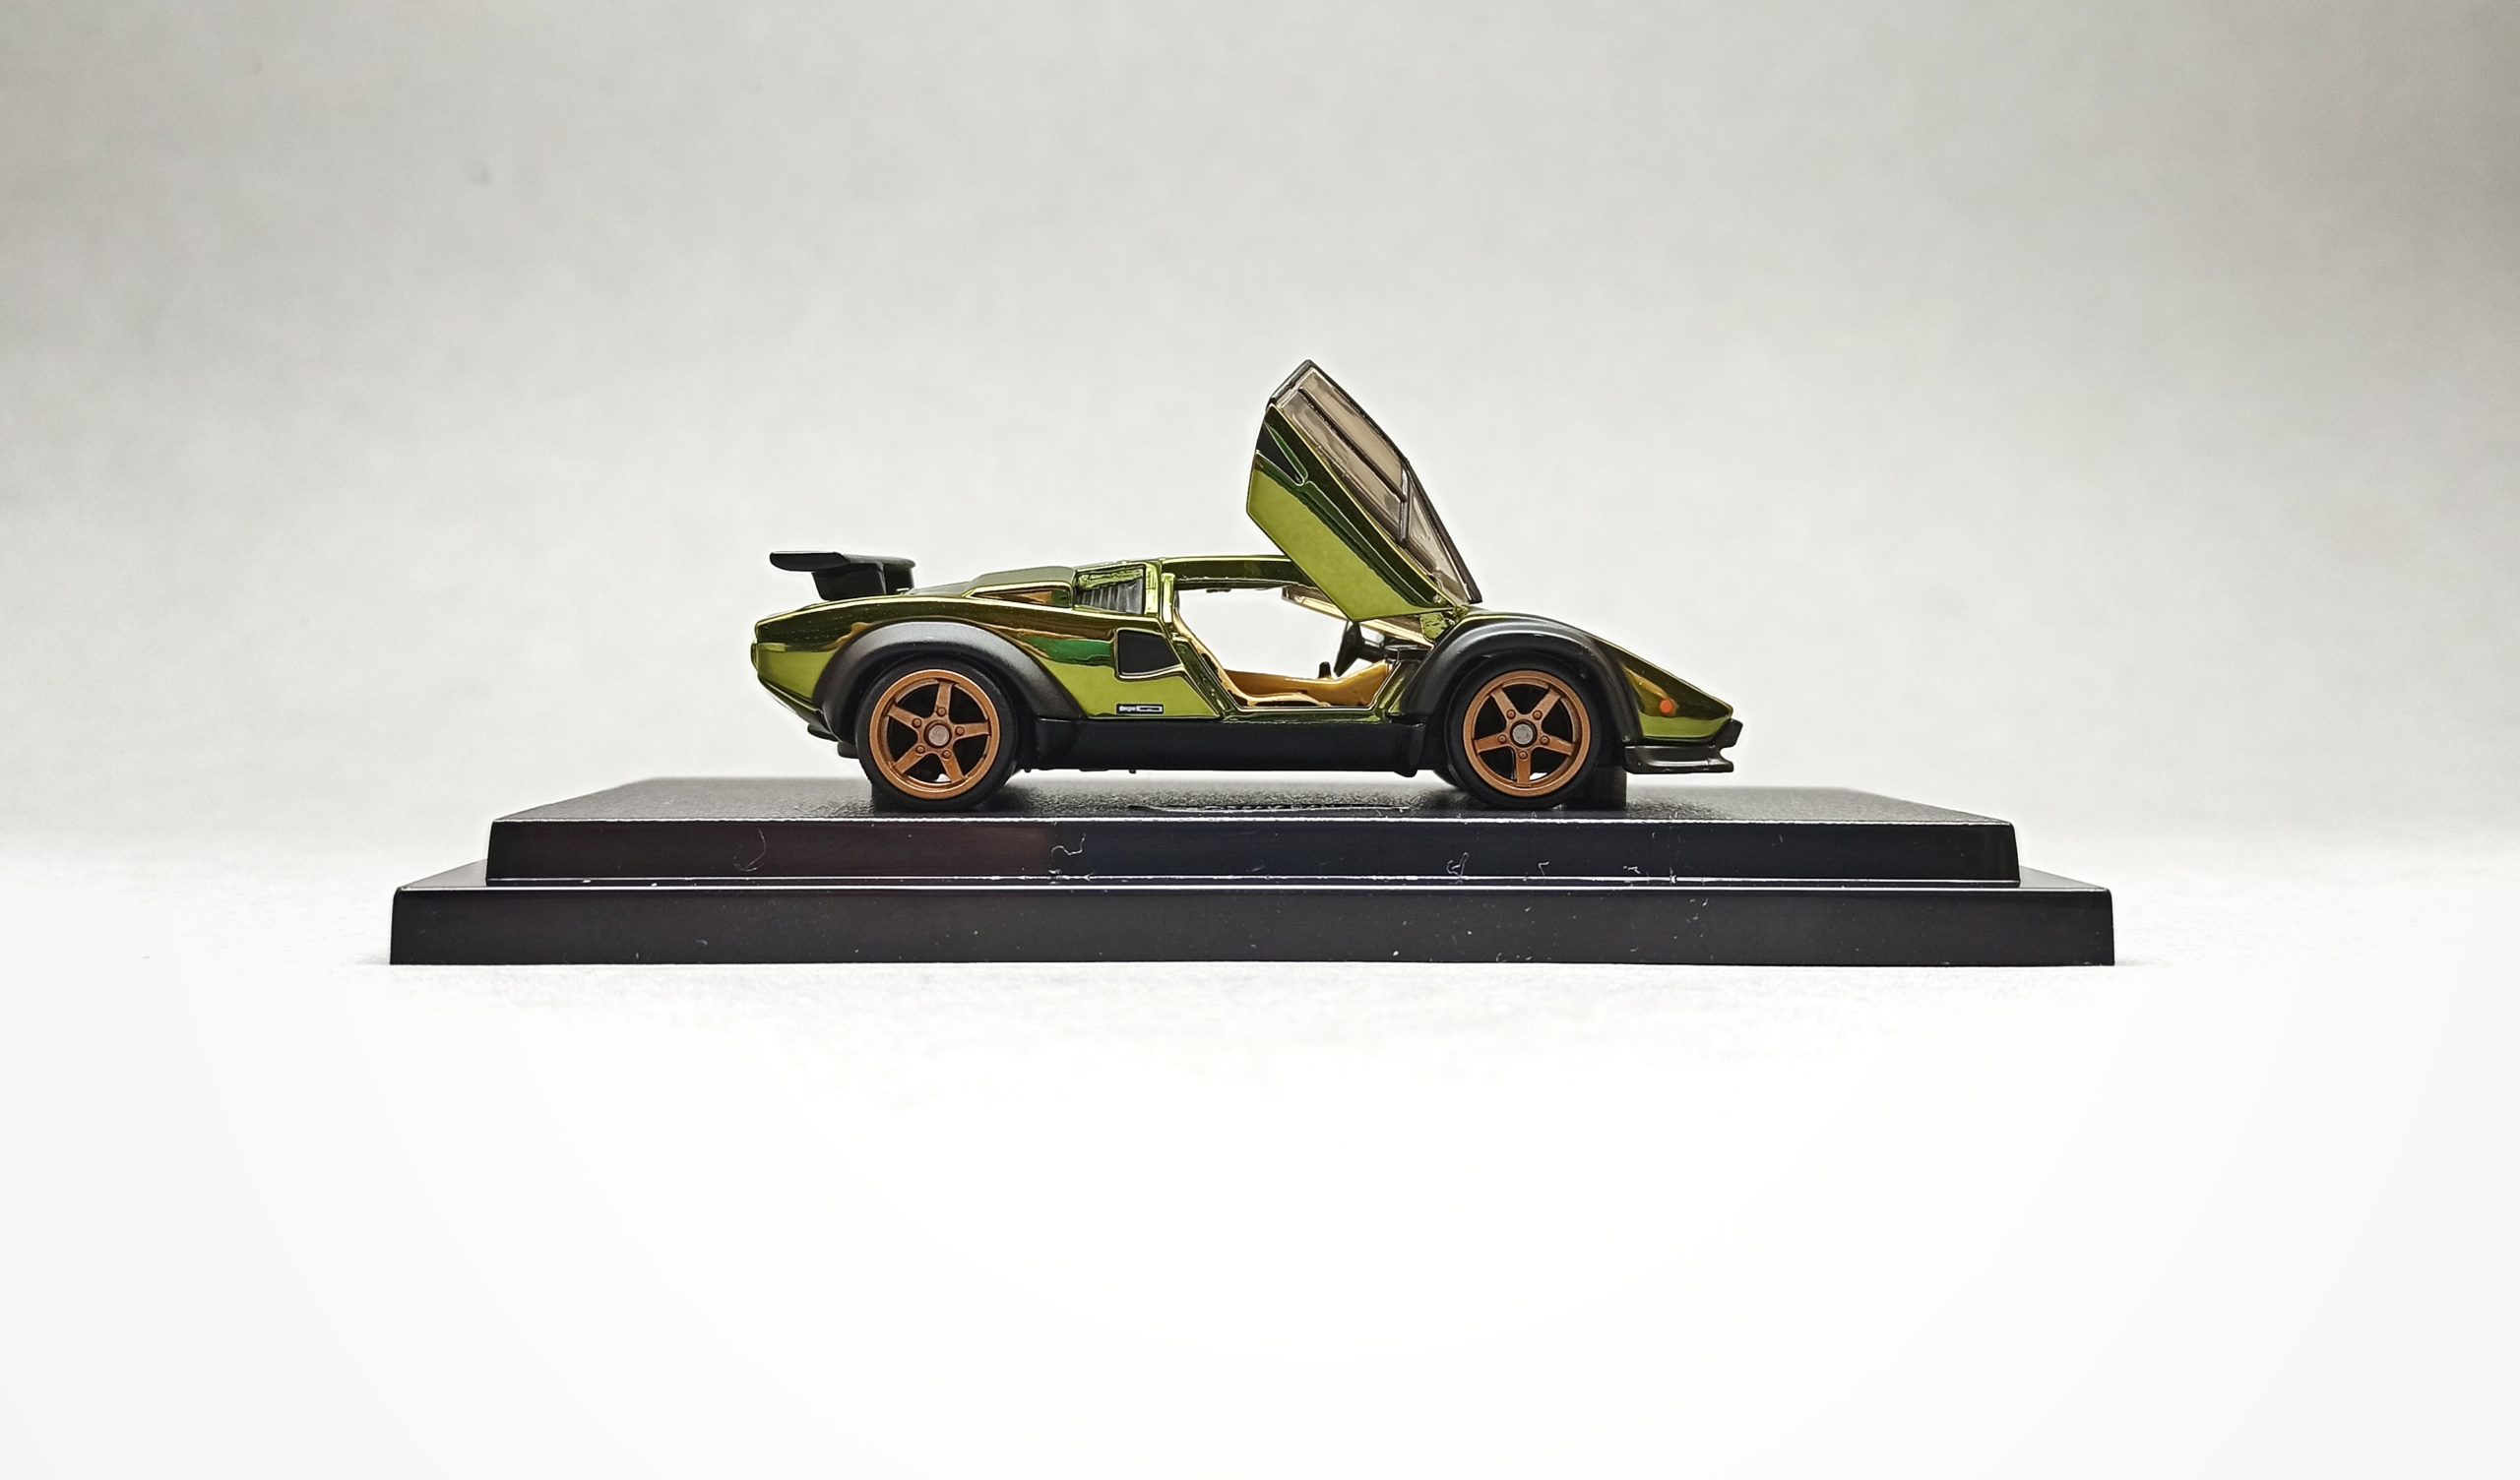 Hot Wheels '82 Lamborghini Countach LP500 S (HGW20) 2022 RLC Exclusive Release Redline Club spectraflame olive green